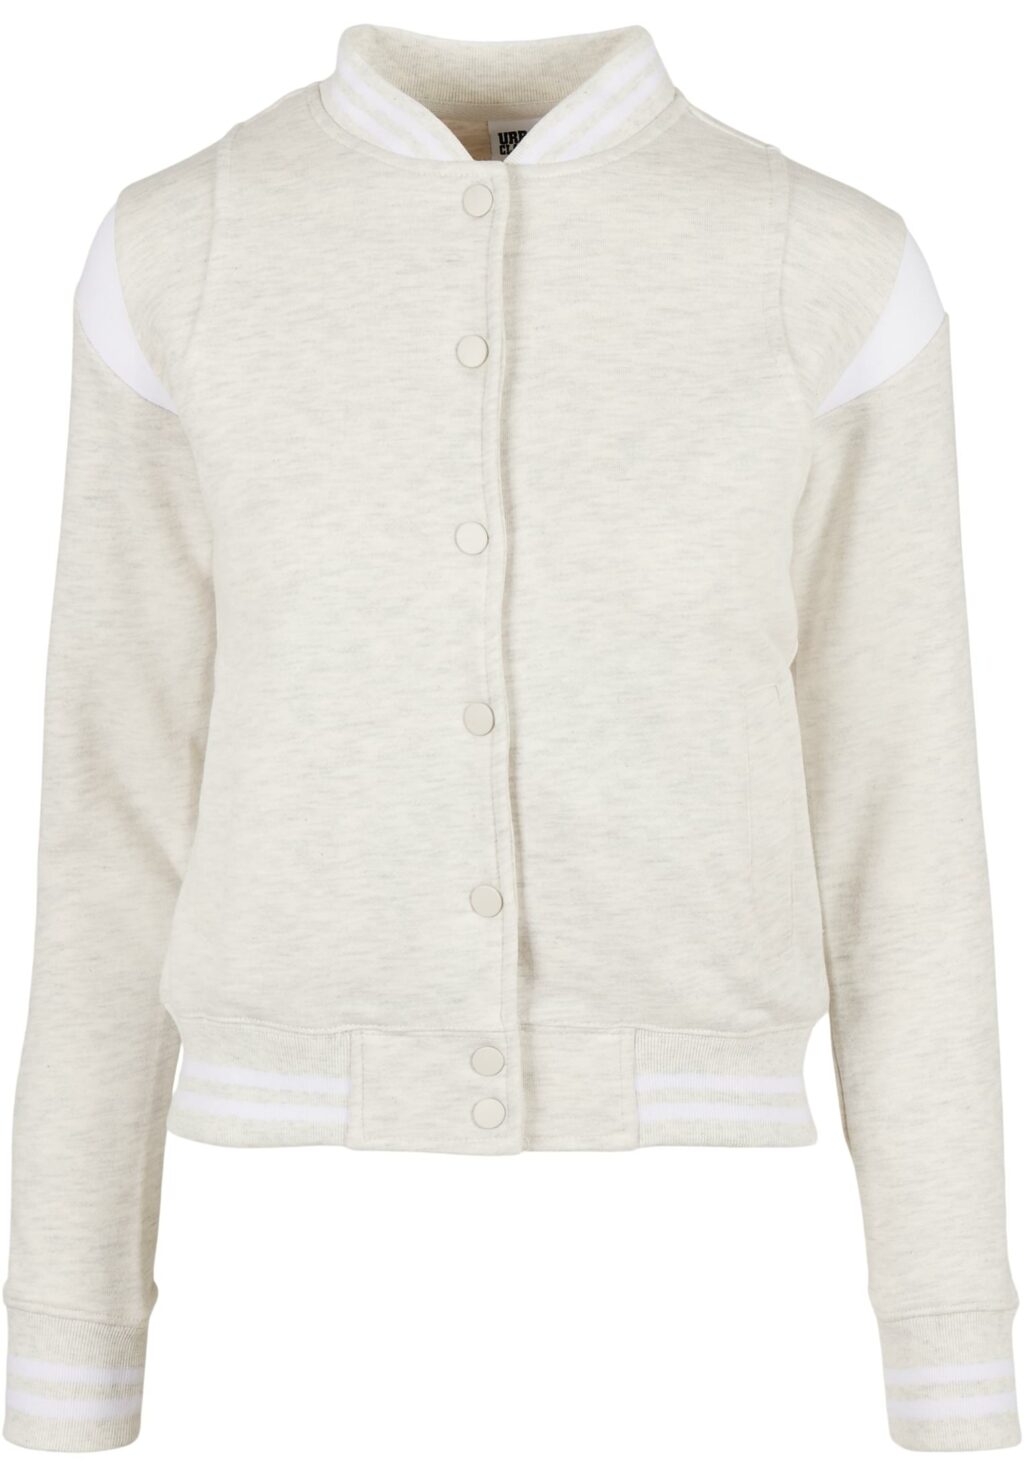 Urban Classics Ladies Inset College Sweat Jacket lightgrey/white TB2618